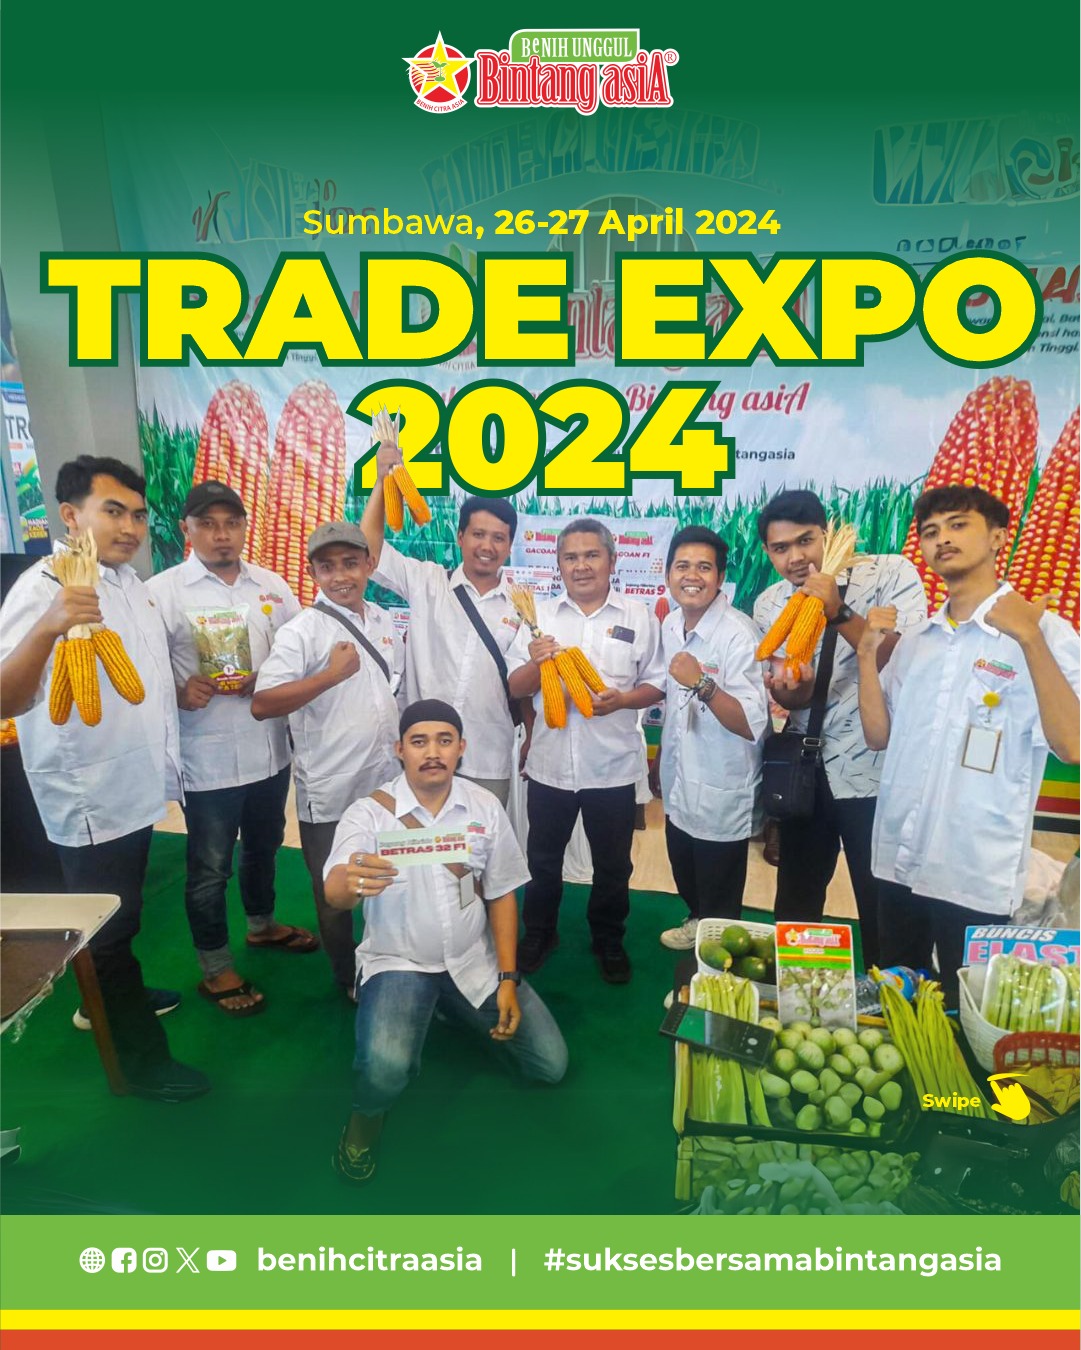 trade expo 2024, trade expo 2024 sumbawa, sumbawa, petani indonesia , bintang asia, benih citra asia